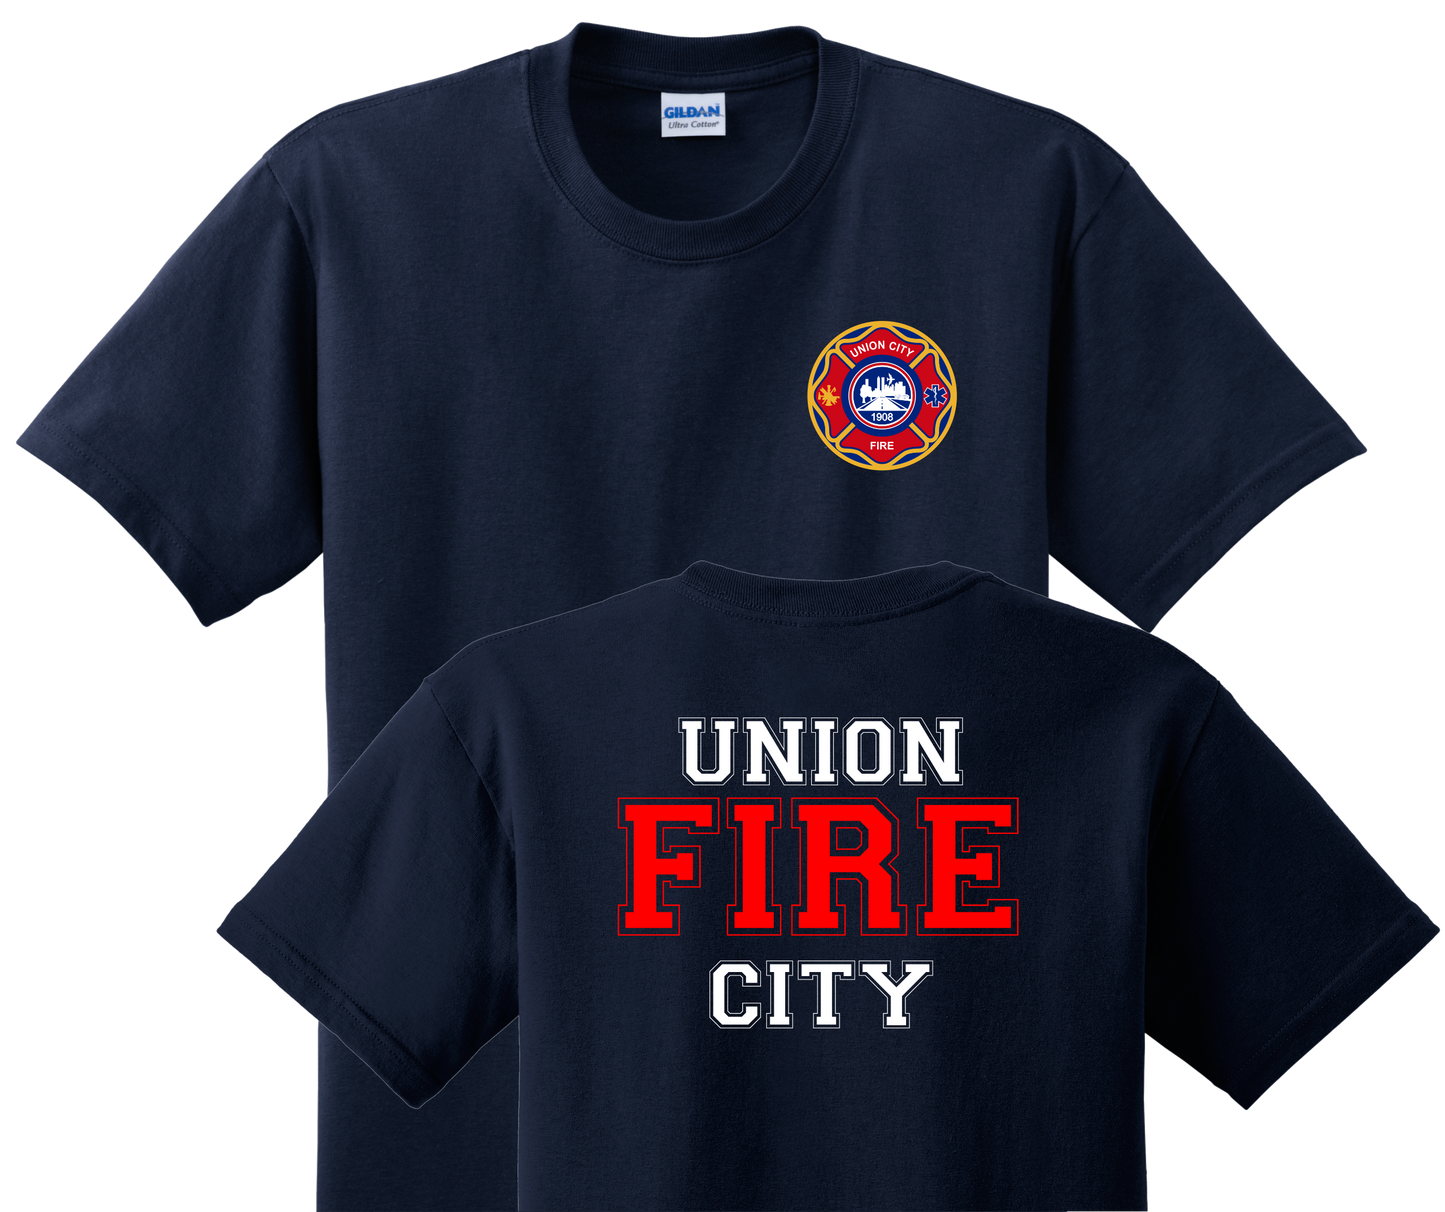 Union City Fire Department Short Sleeve t-shirt